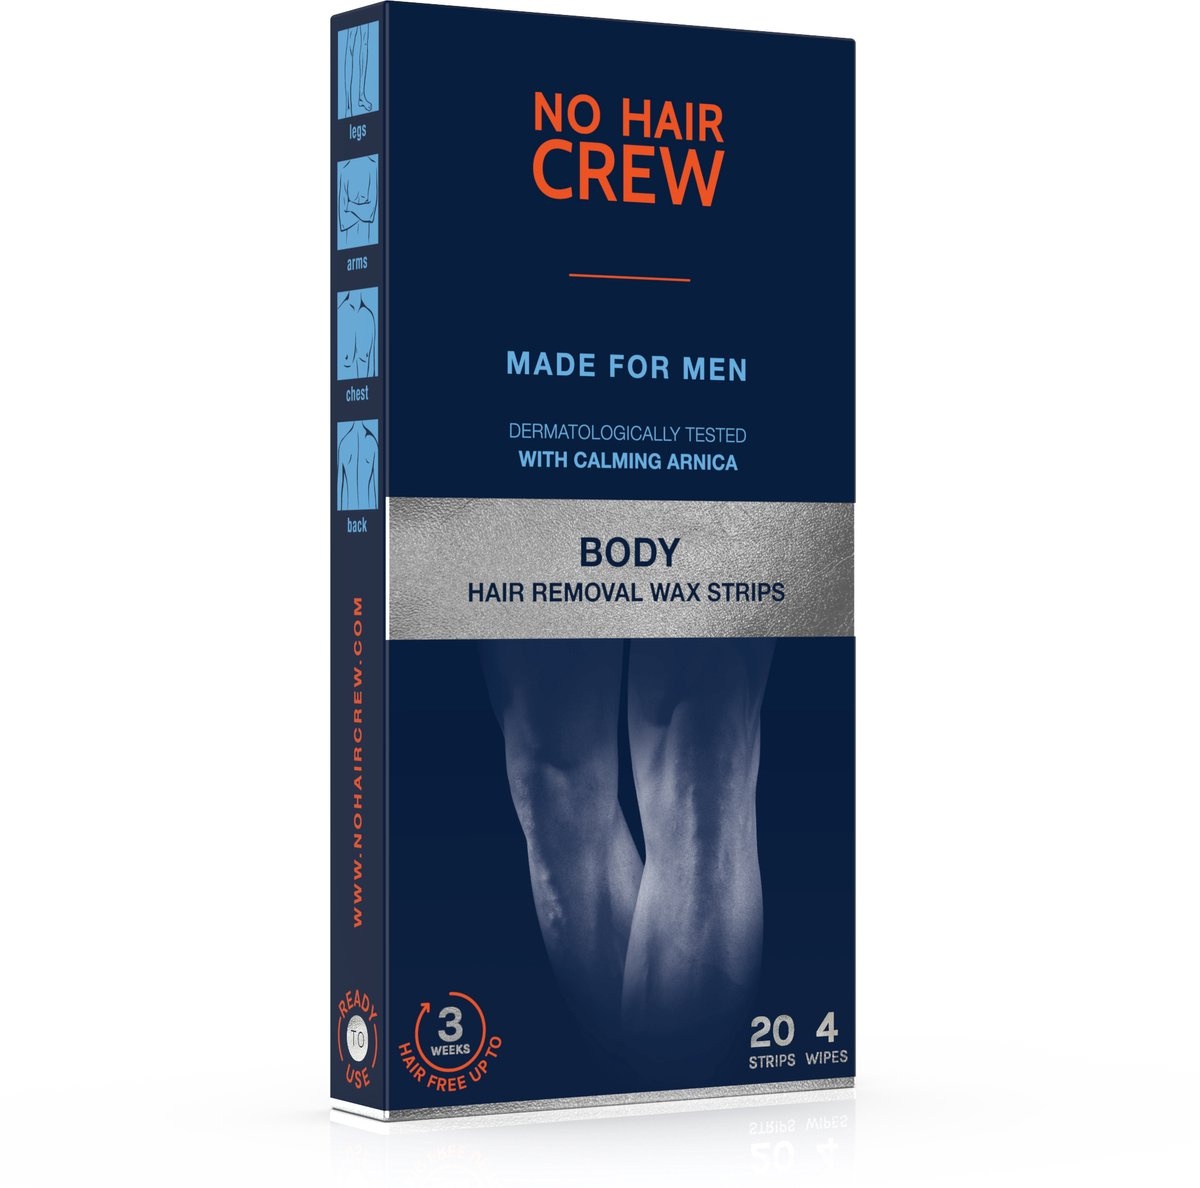 NO HAIR CREW - 20 Wax strips for men